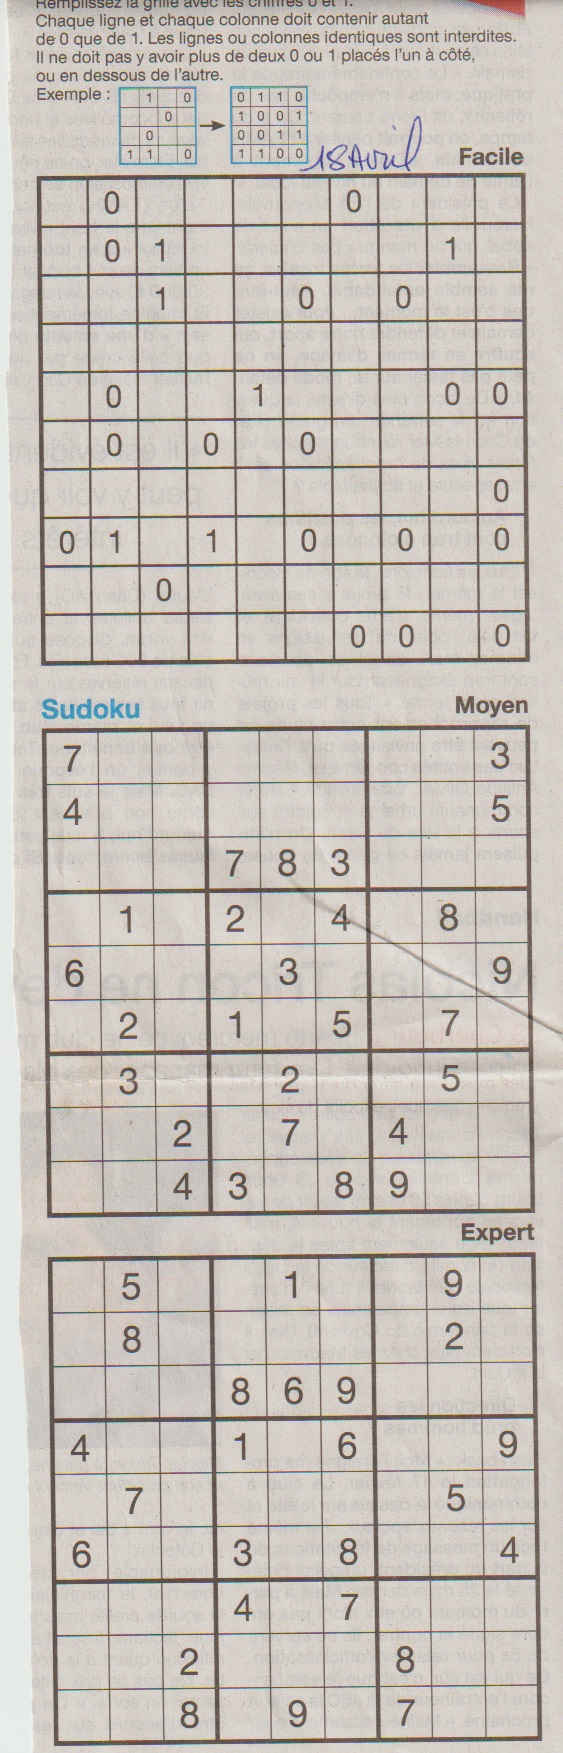 sudoku24.jpg